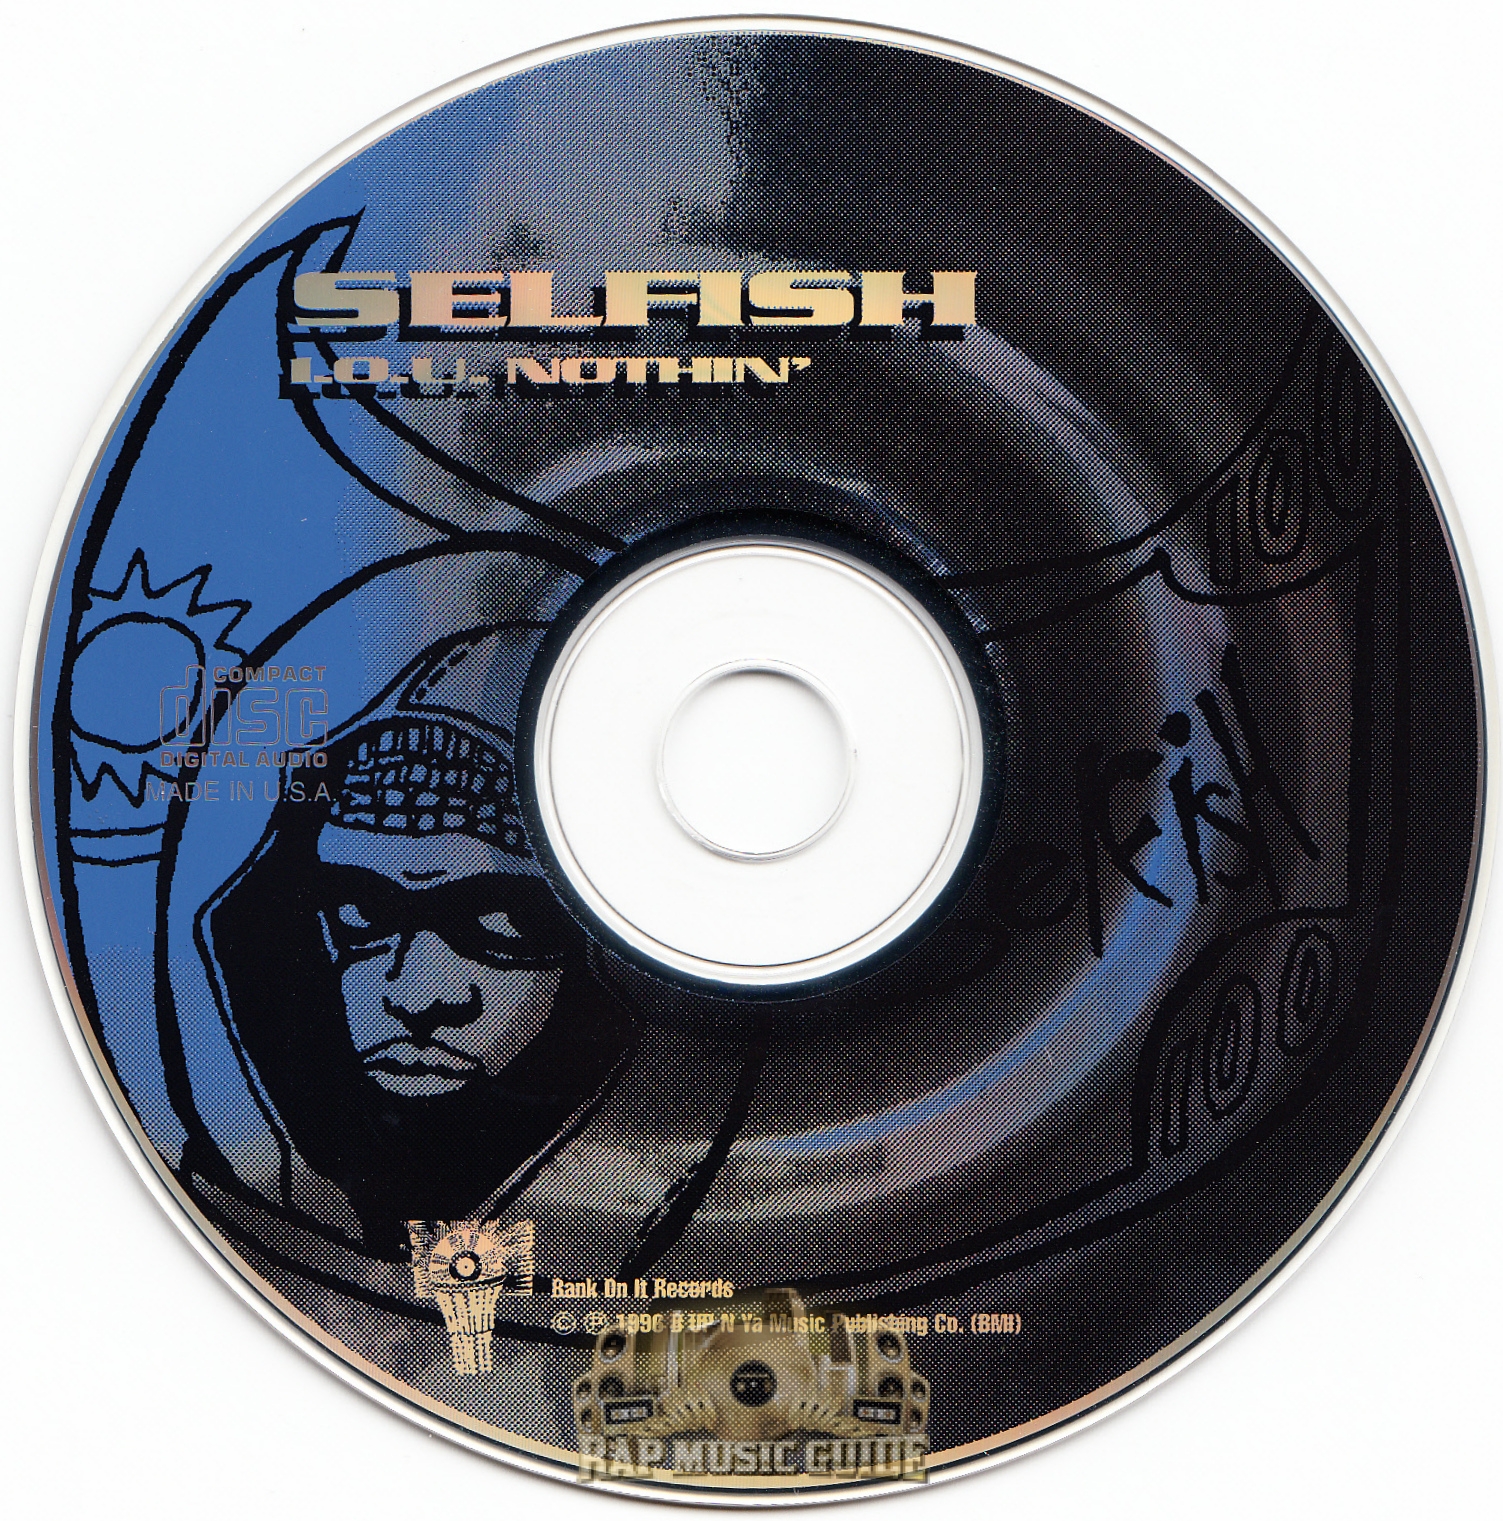 Selfish - I.O.U. Nothin': CD | Rap Music Guide